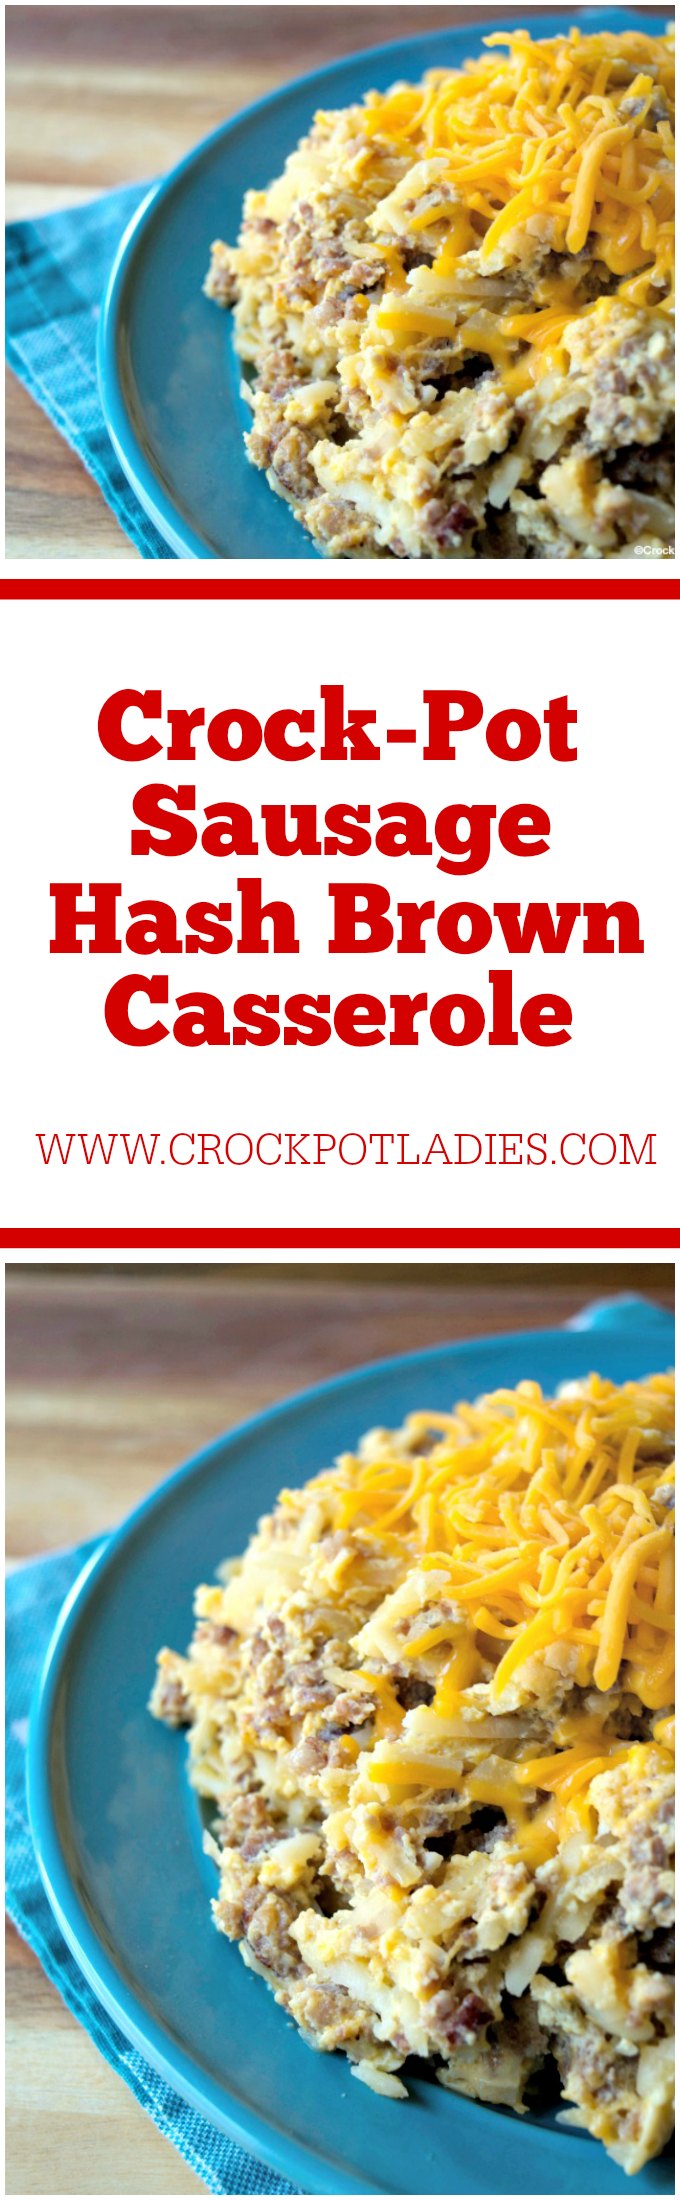 Crock-Pot Sausage Hash Brown Casserole